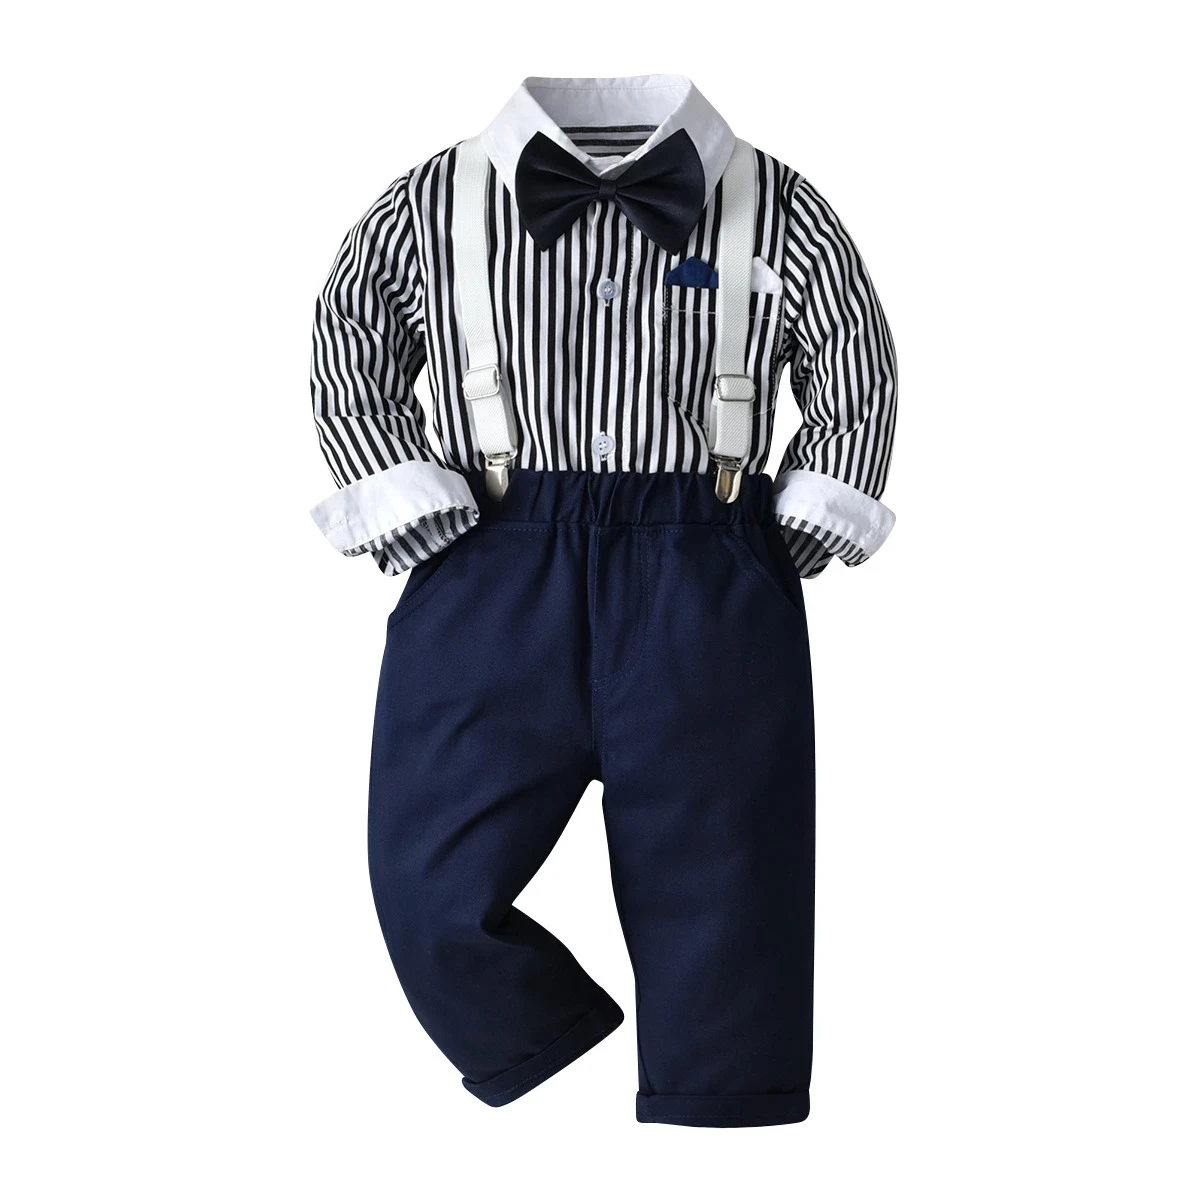 

2021 New Arrived Black&White Striped Shirt + Navy Pants 4 Pieces Children Suit Set, Blue,gray